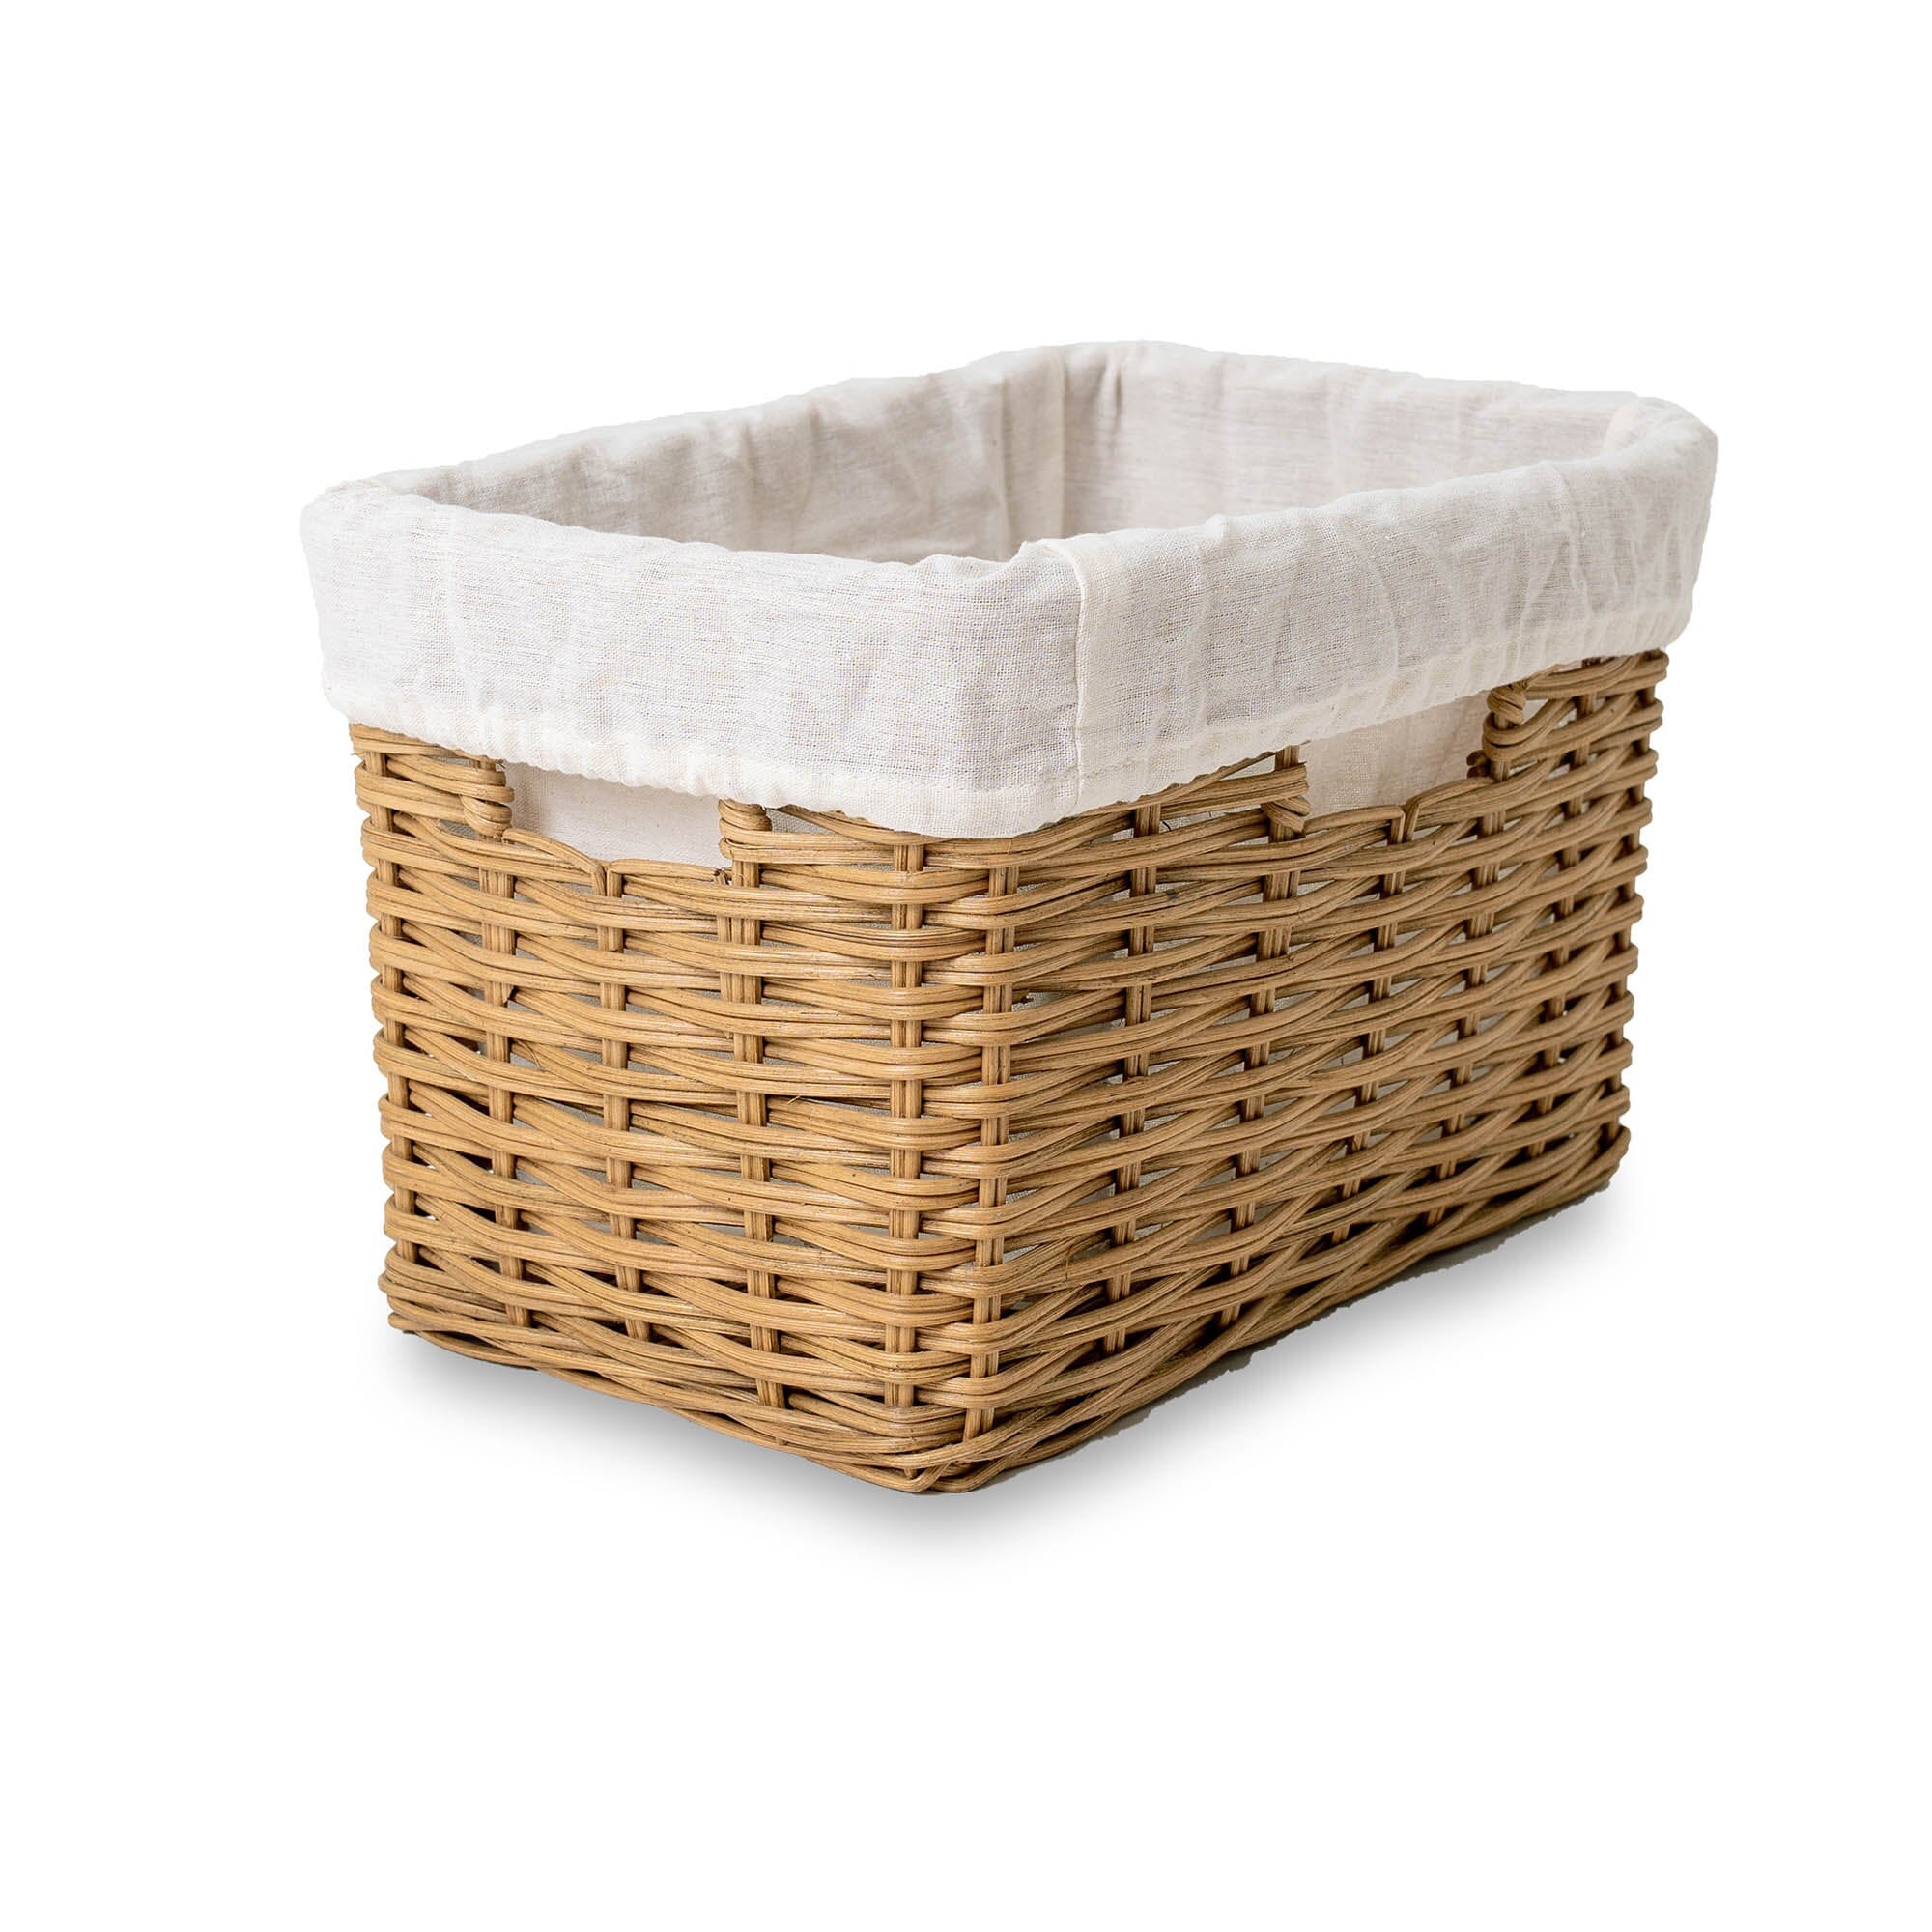 Rectangular Storage Baskets for Pantry, Small Rattan Kitchen